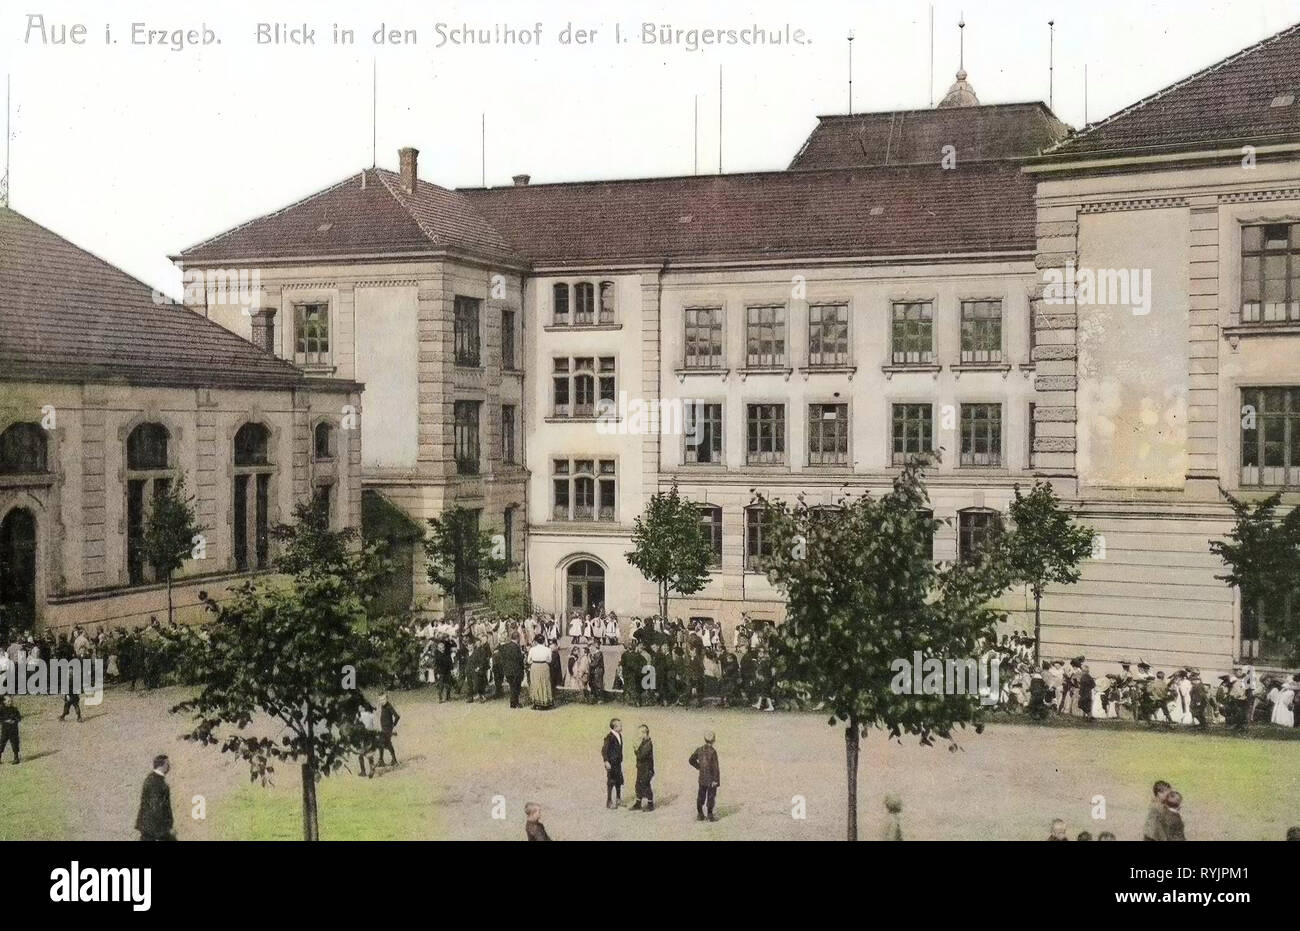 Albrecht-Dürer-Gundschule Aue, 1910, Erzgebirgskreis, Aue, Schulhof der Bürgerschule, Germania Foto Stock